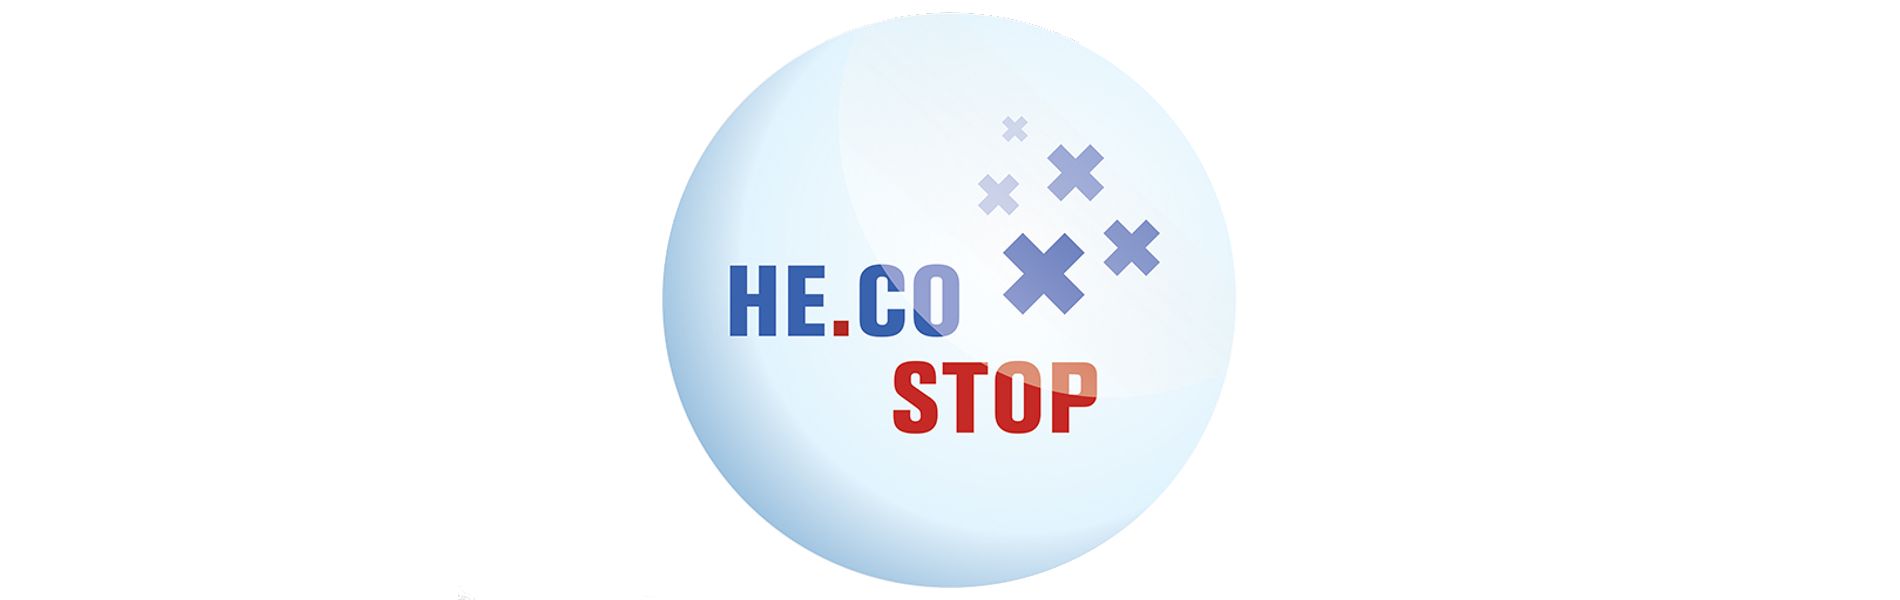 Heco stop